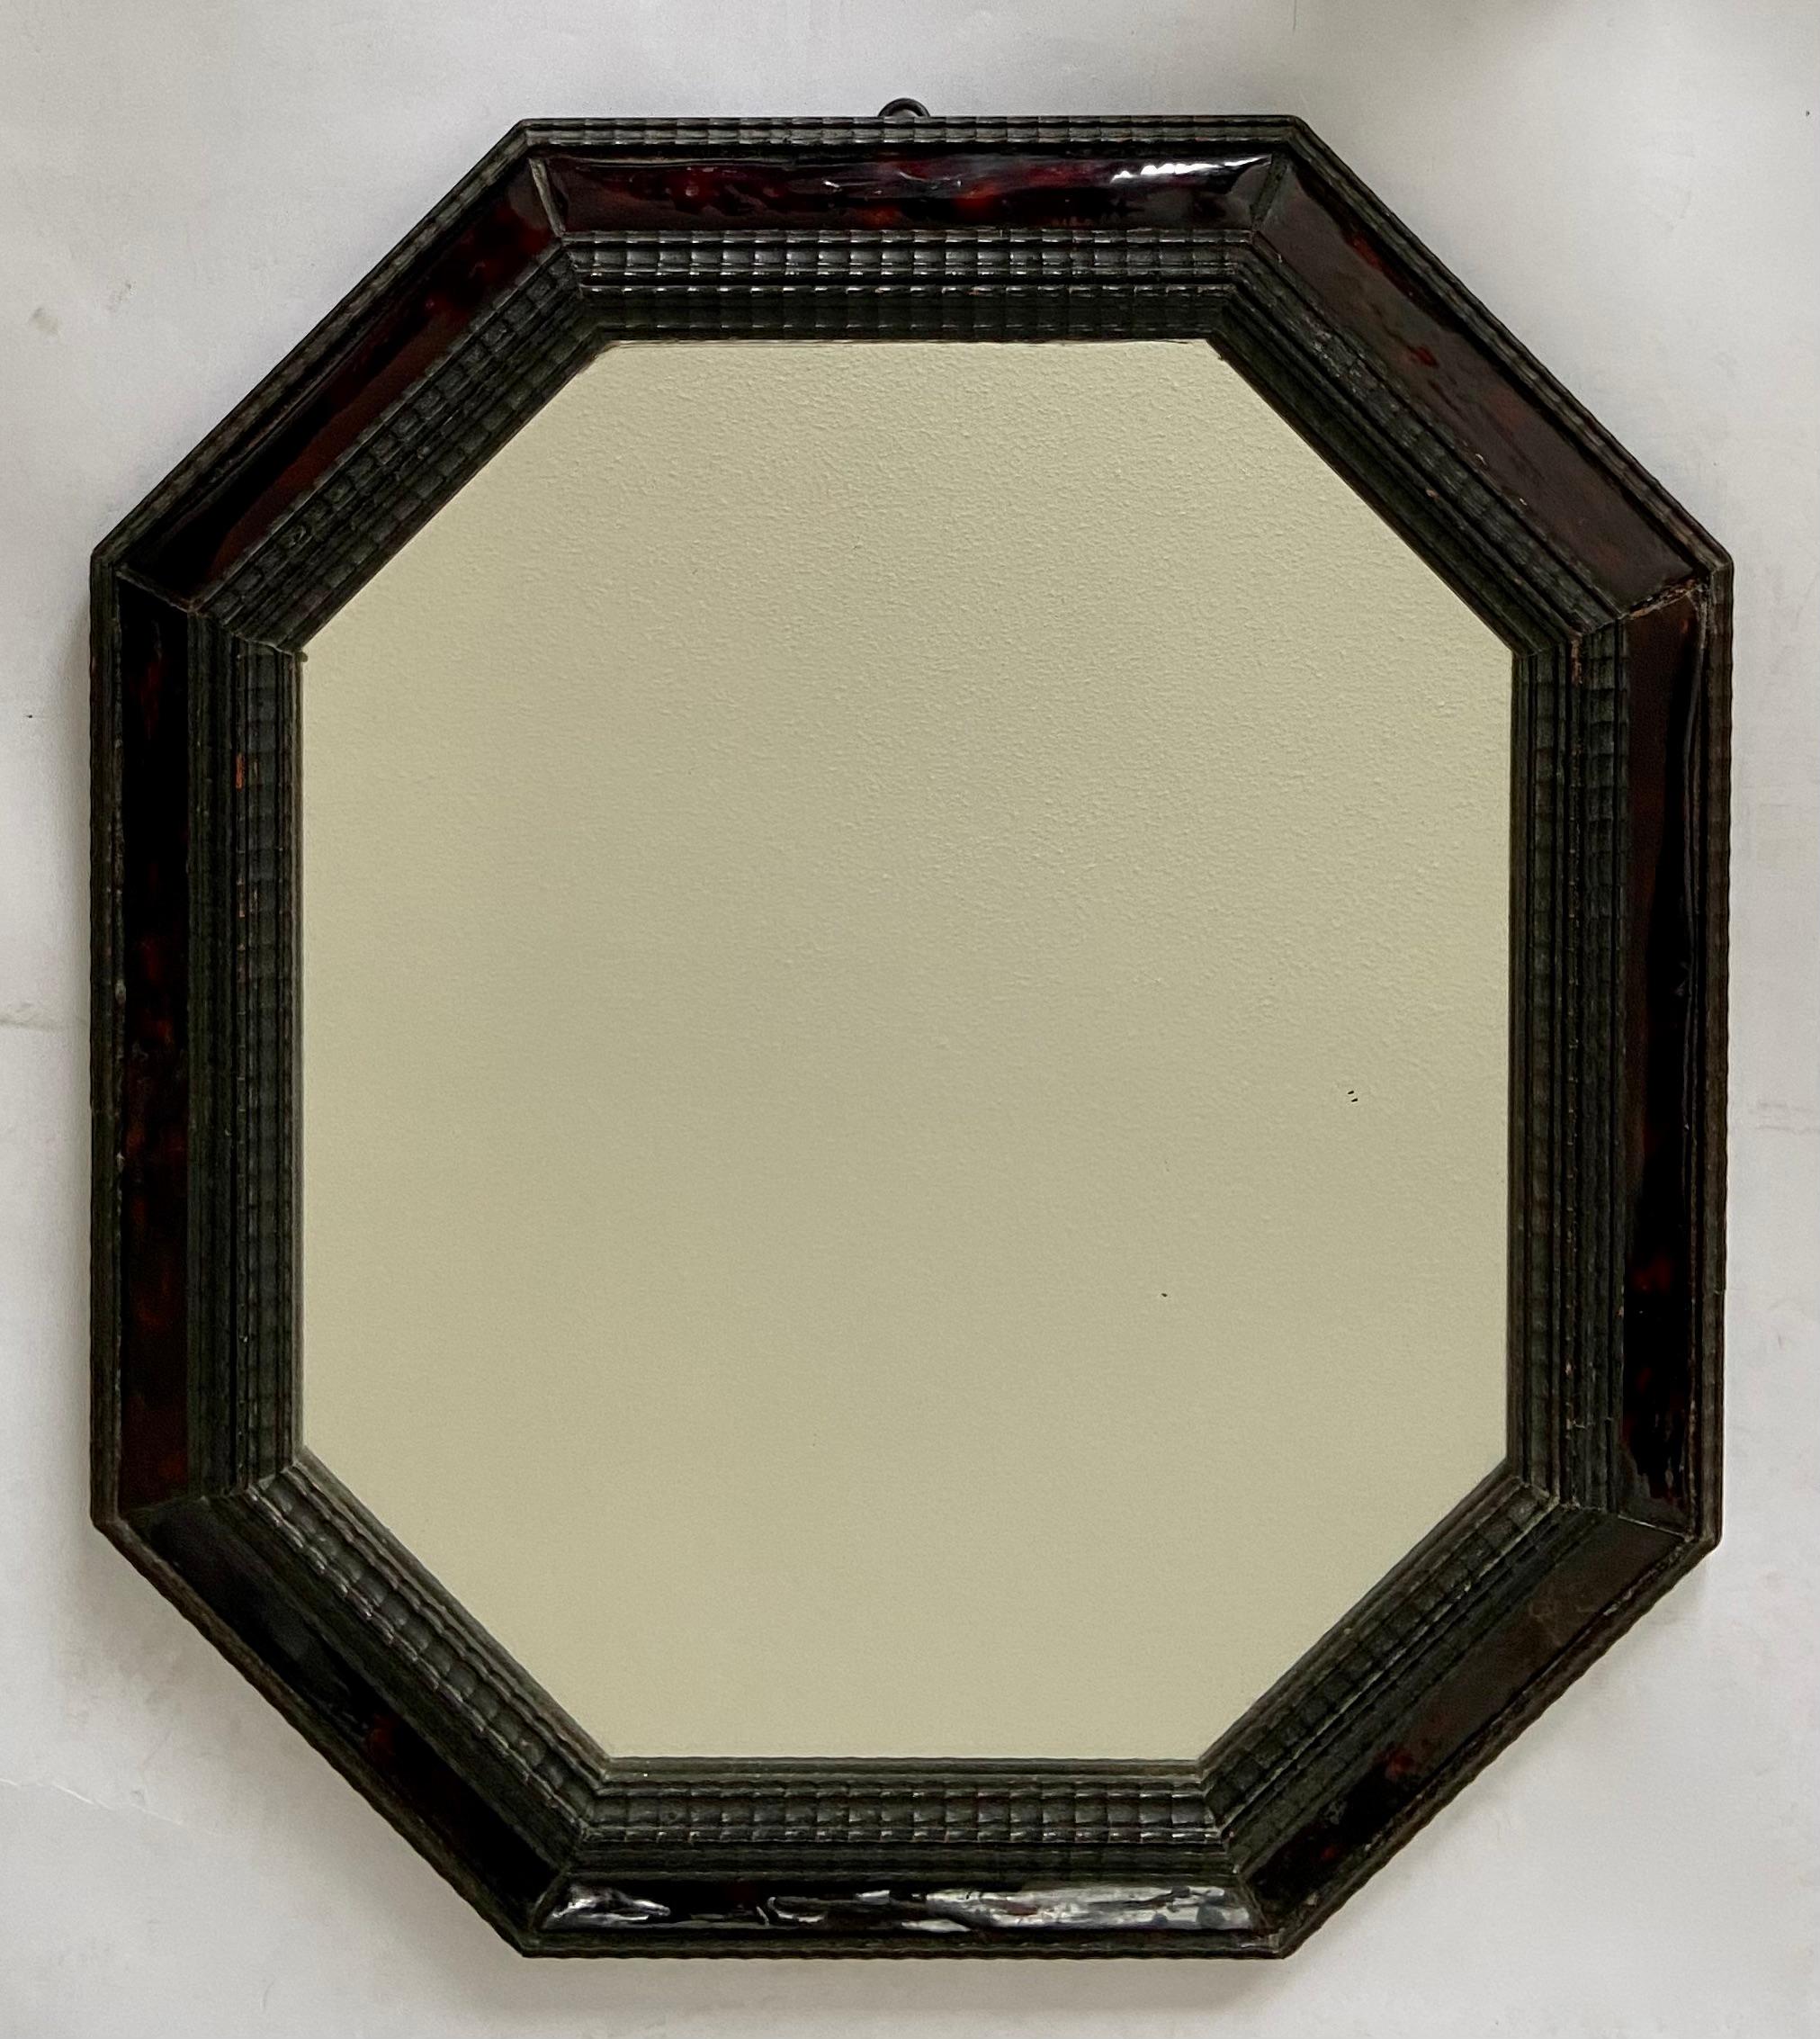 Octagonal mirror in ebonished frame with tortoise shell, Dutch, 19th Century.